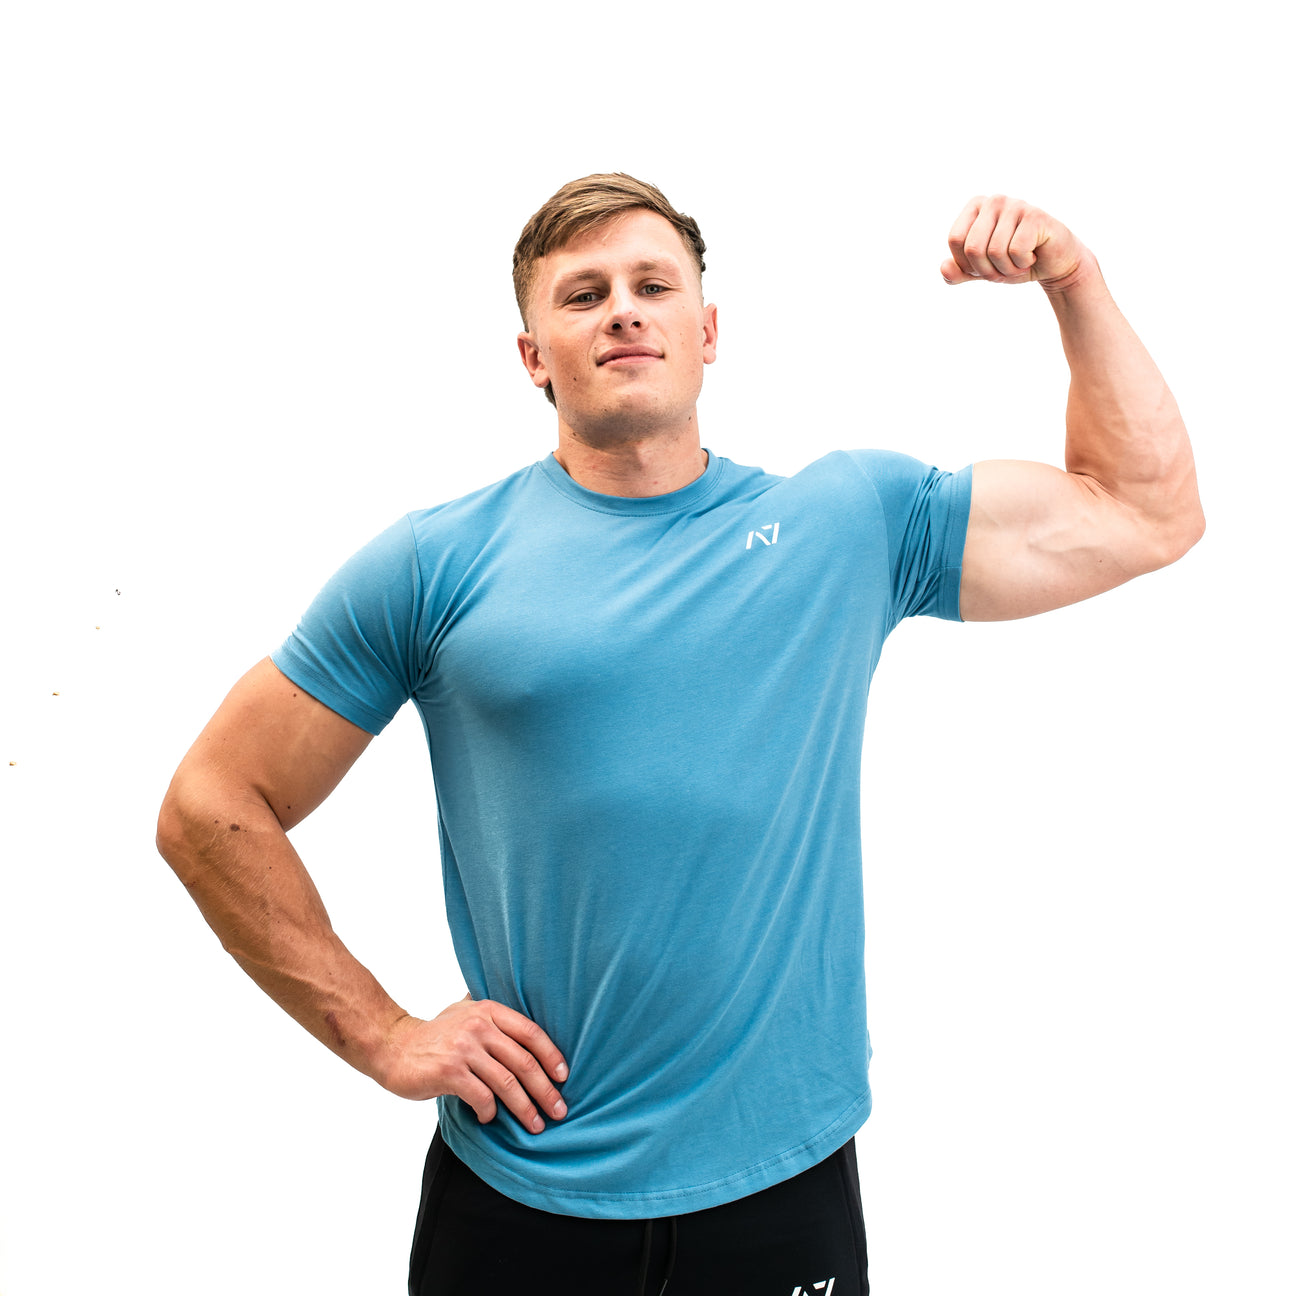 Men's Gym Tops | Men's Lifting Shirts, Tanks, & More | A7